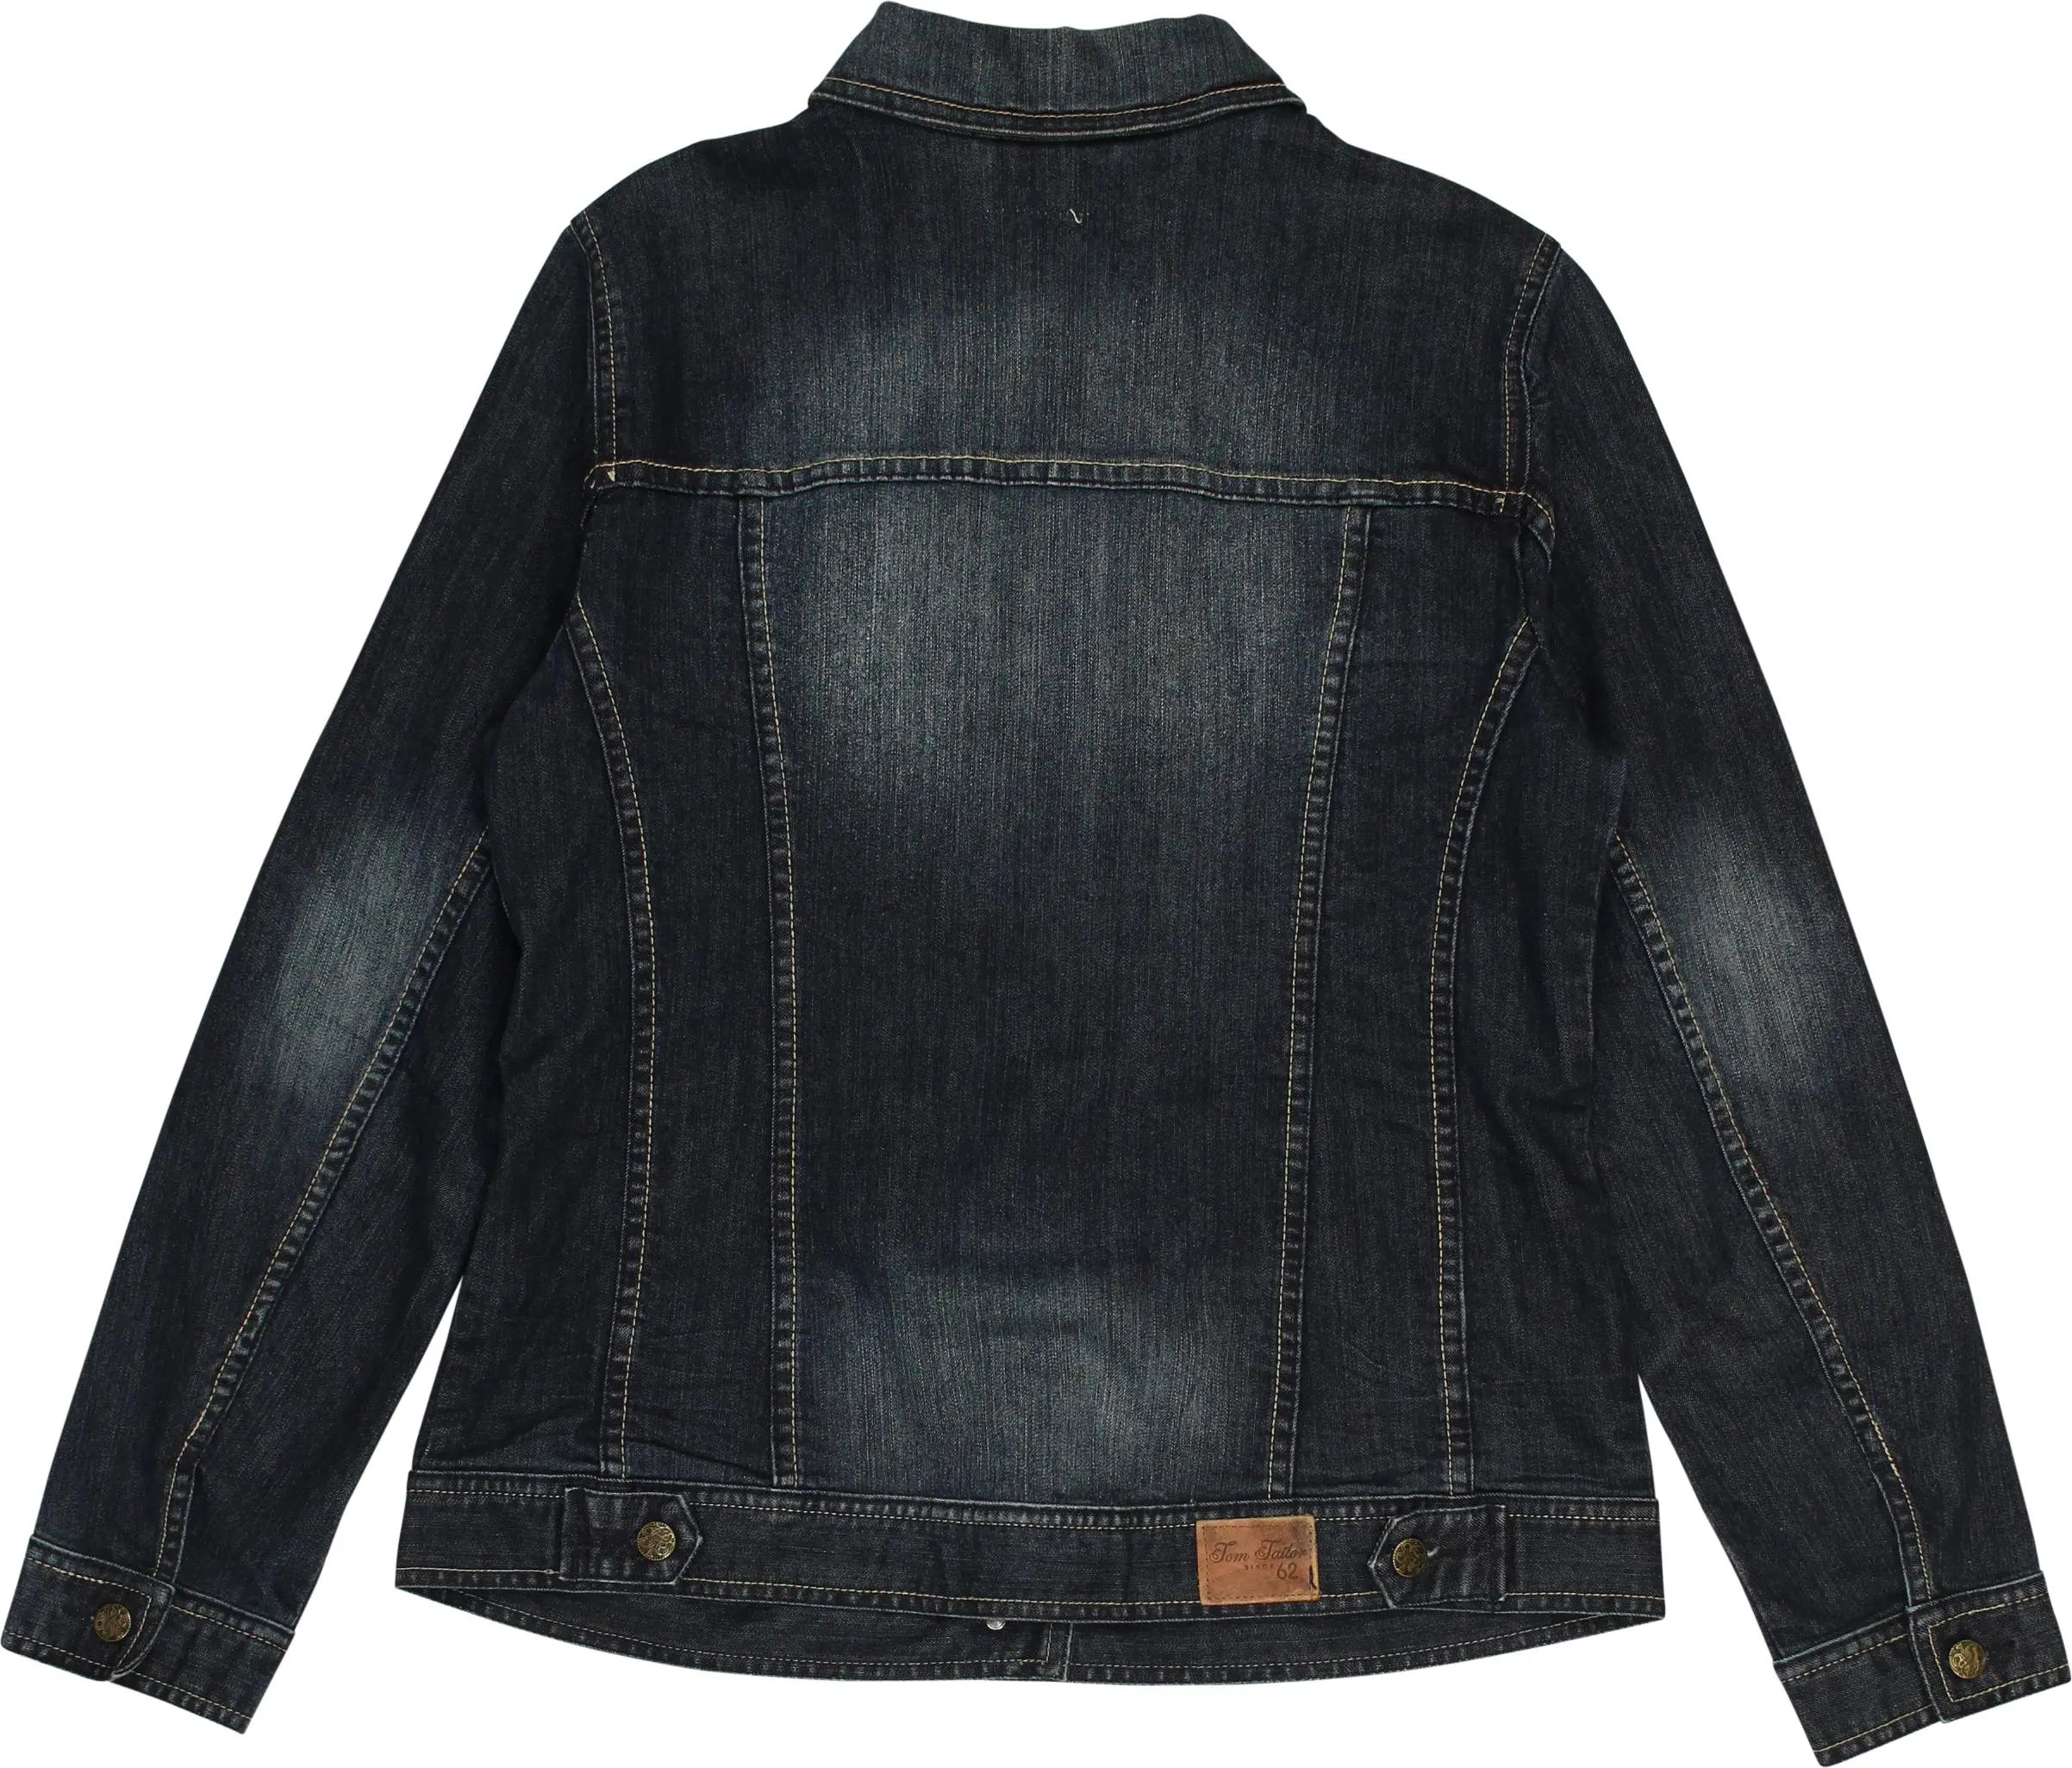 Tom Tailor - Denim Jacket- ThriftTale.com - Vintage and second handclothing